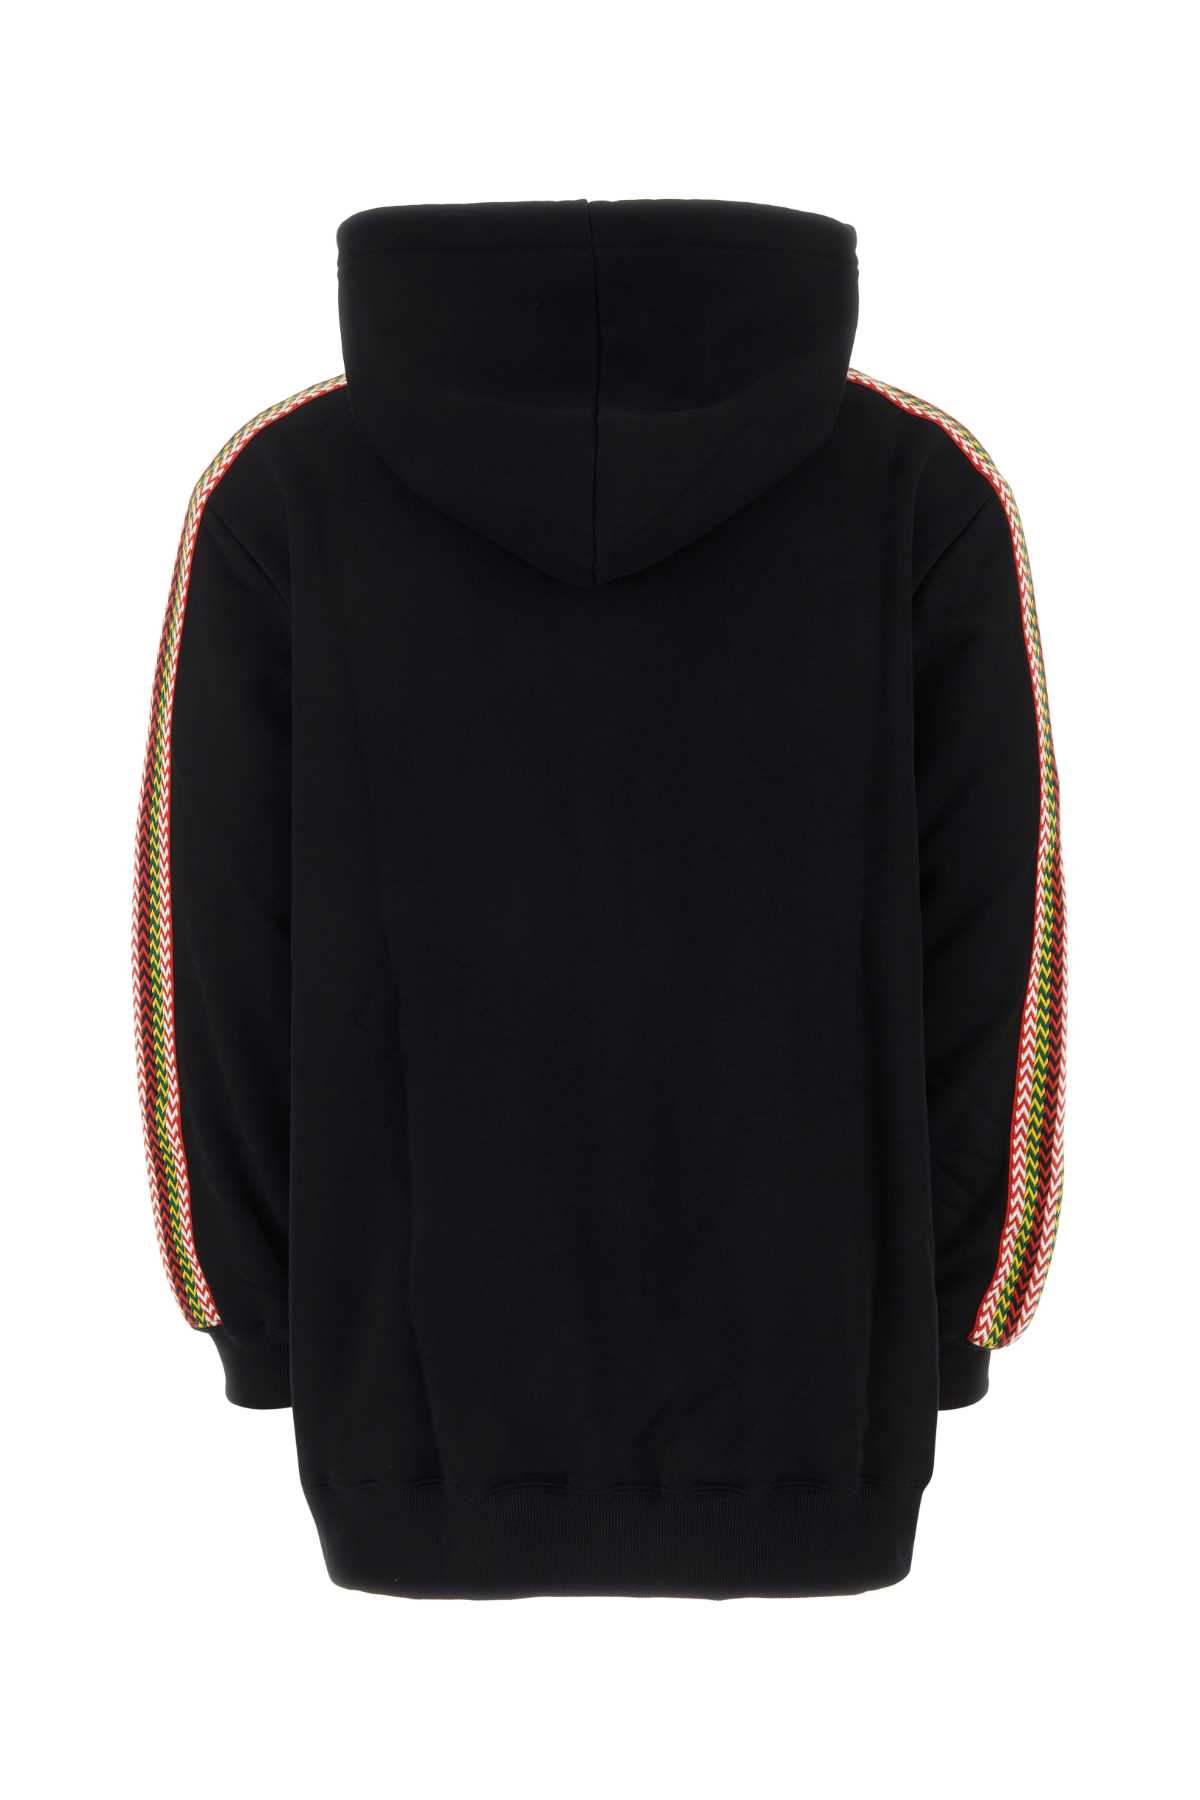 Lanvin Black Cotton Oversize Sweatshirt